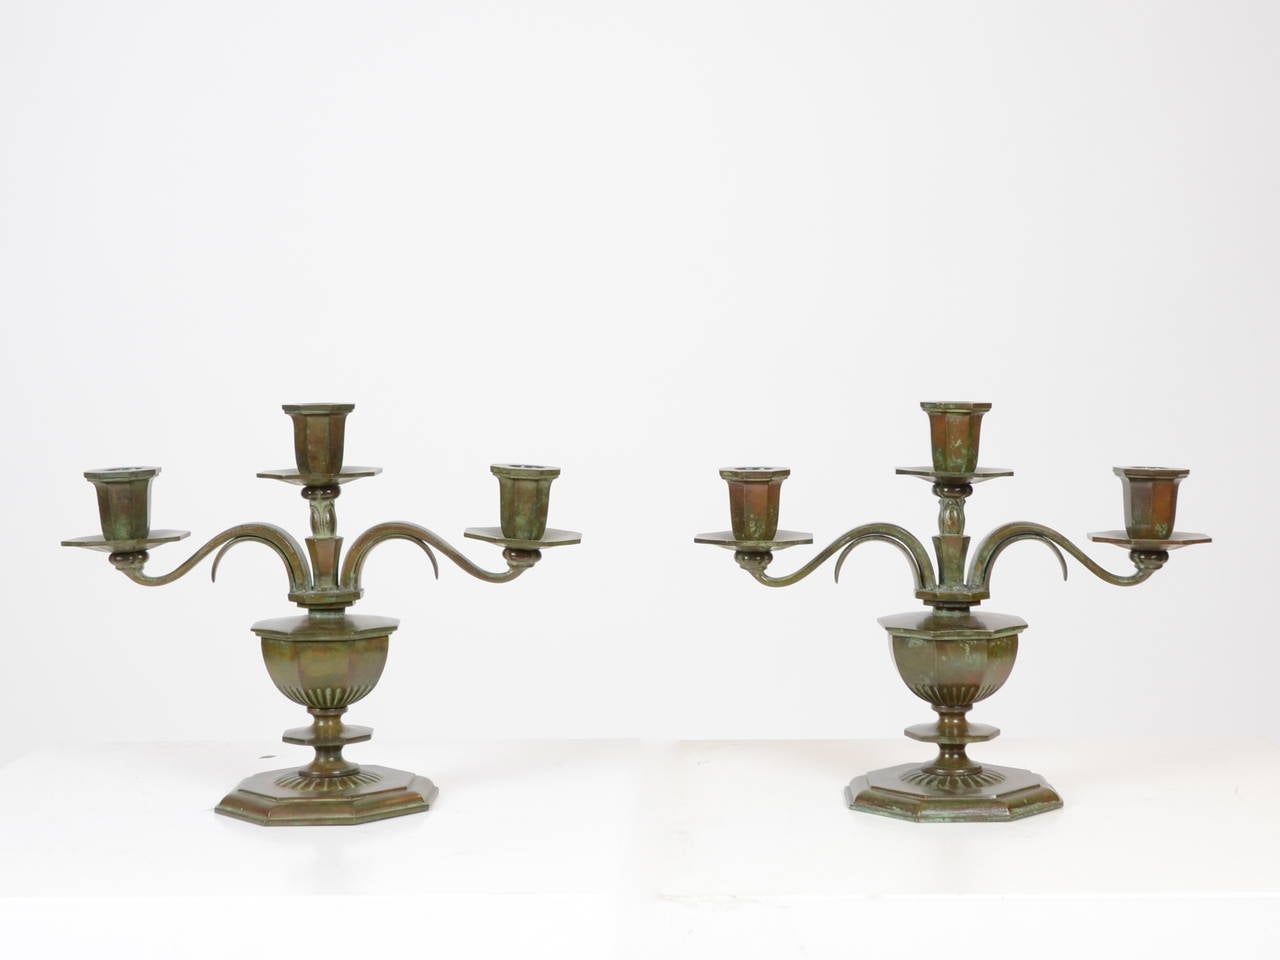 A pair of patinated massive bronze candelabra, by Sune Bäckström. Sweden, 1920s-1930s.